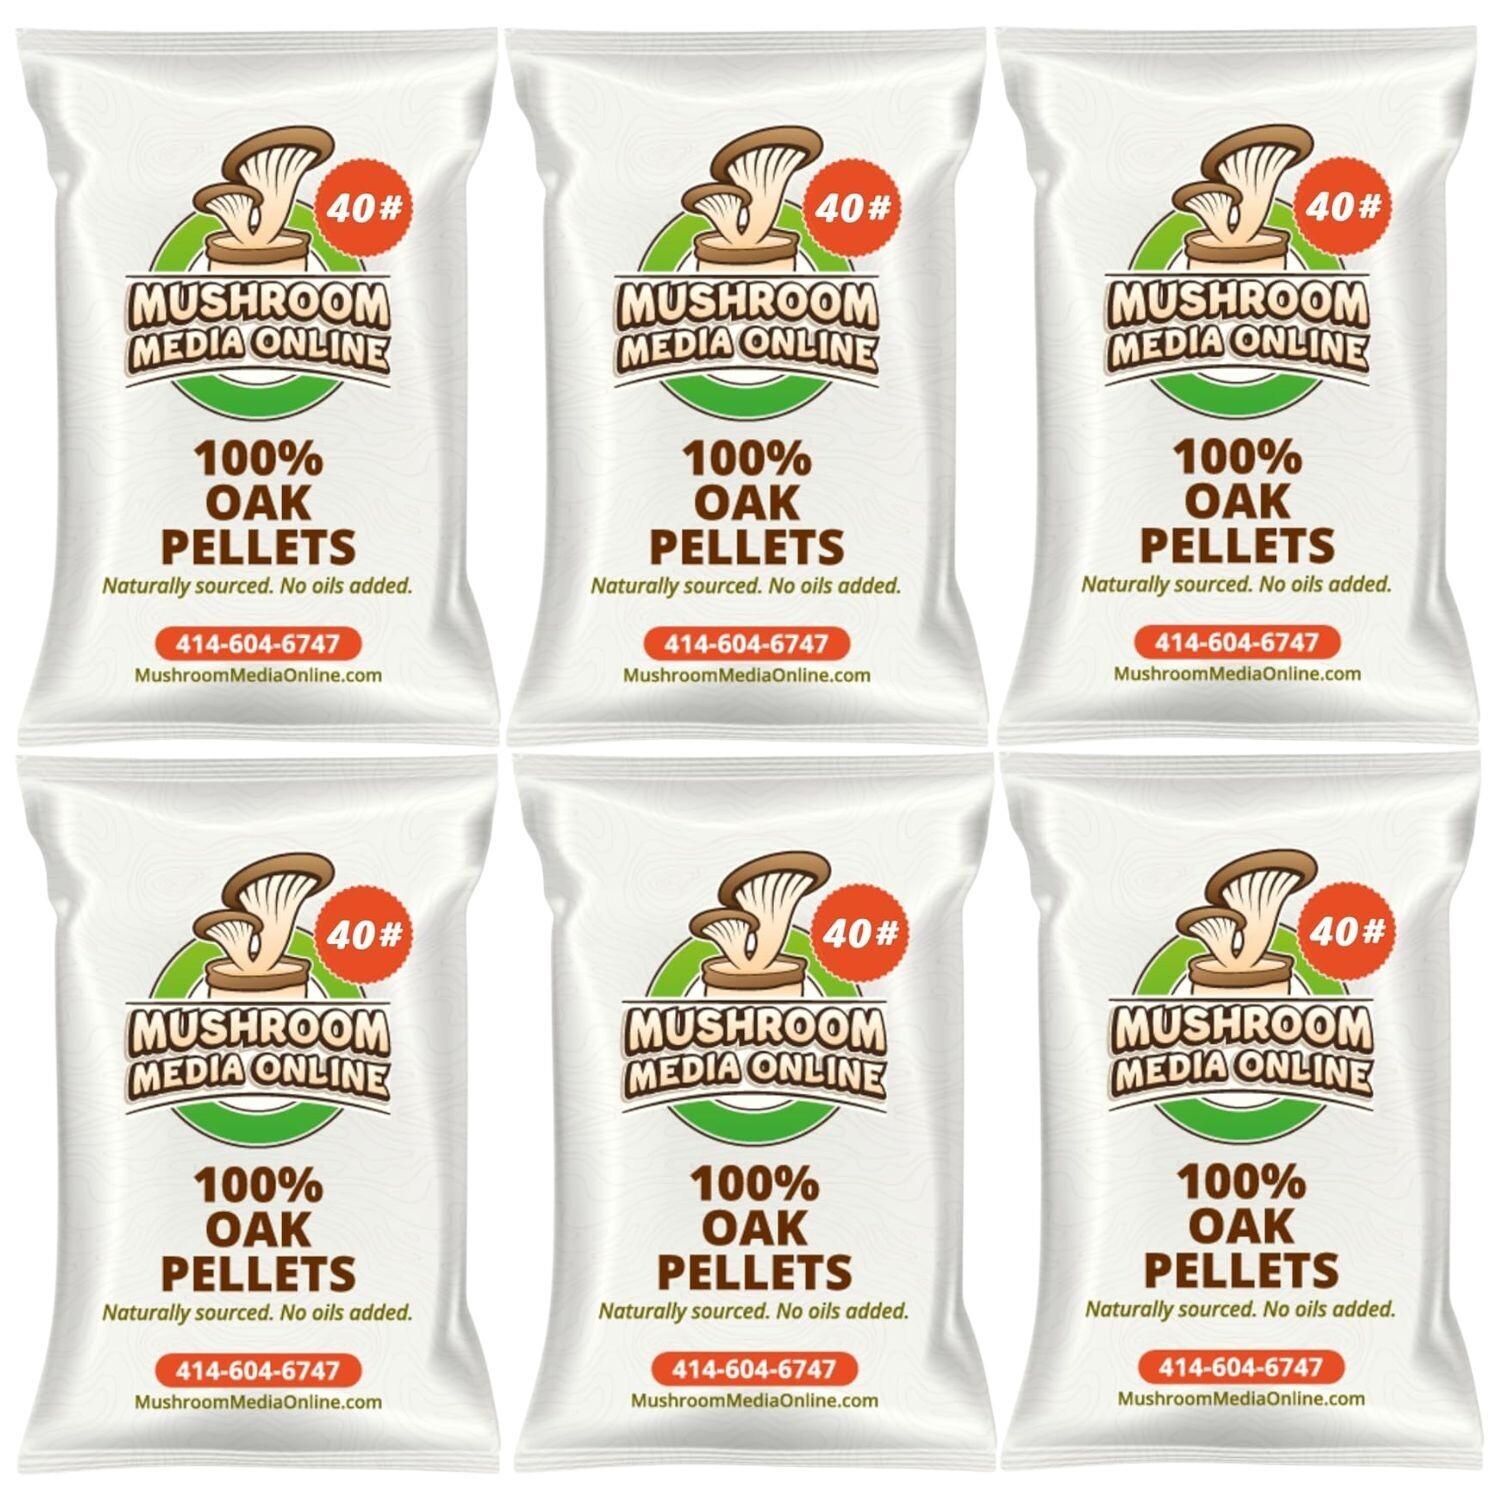 240# (12 x 20#Bag) of 100% Oak Mushroom Pellets - Free shipping